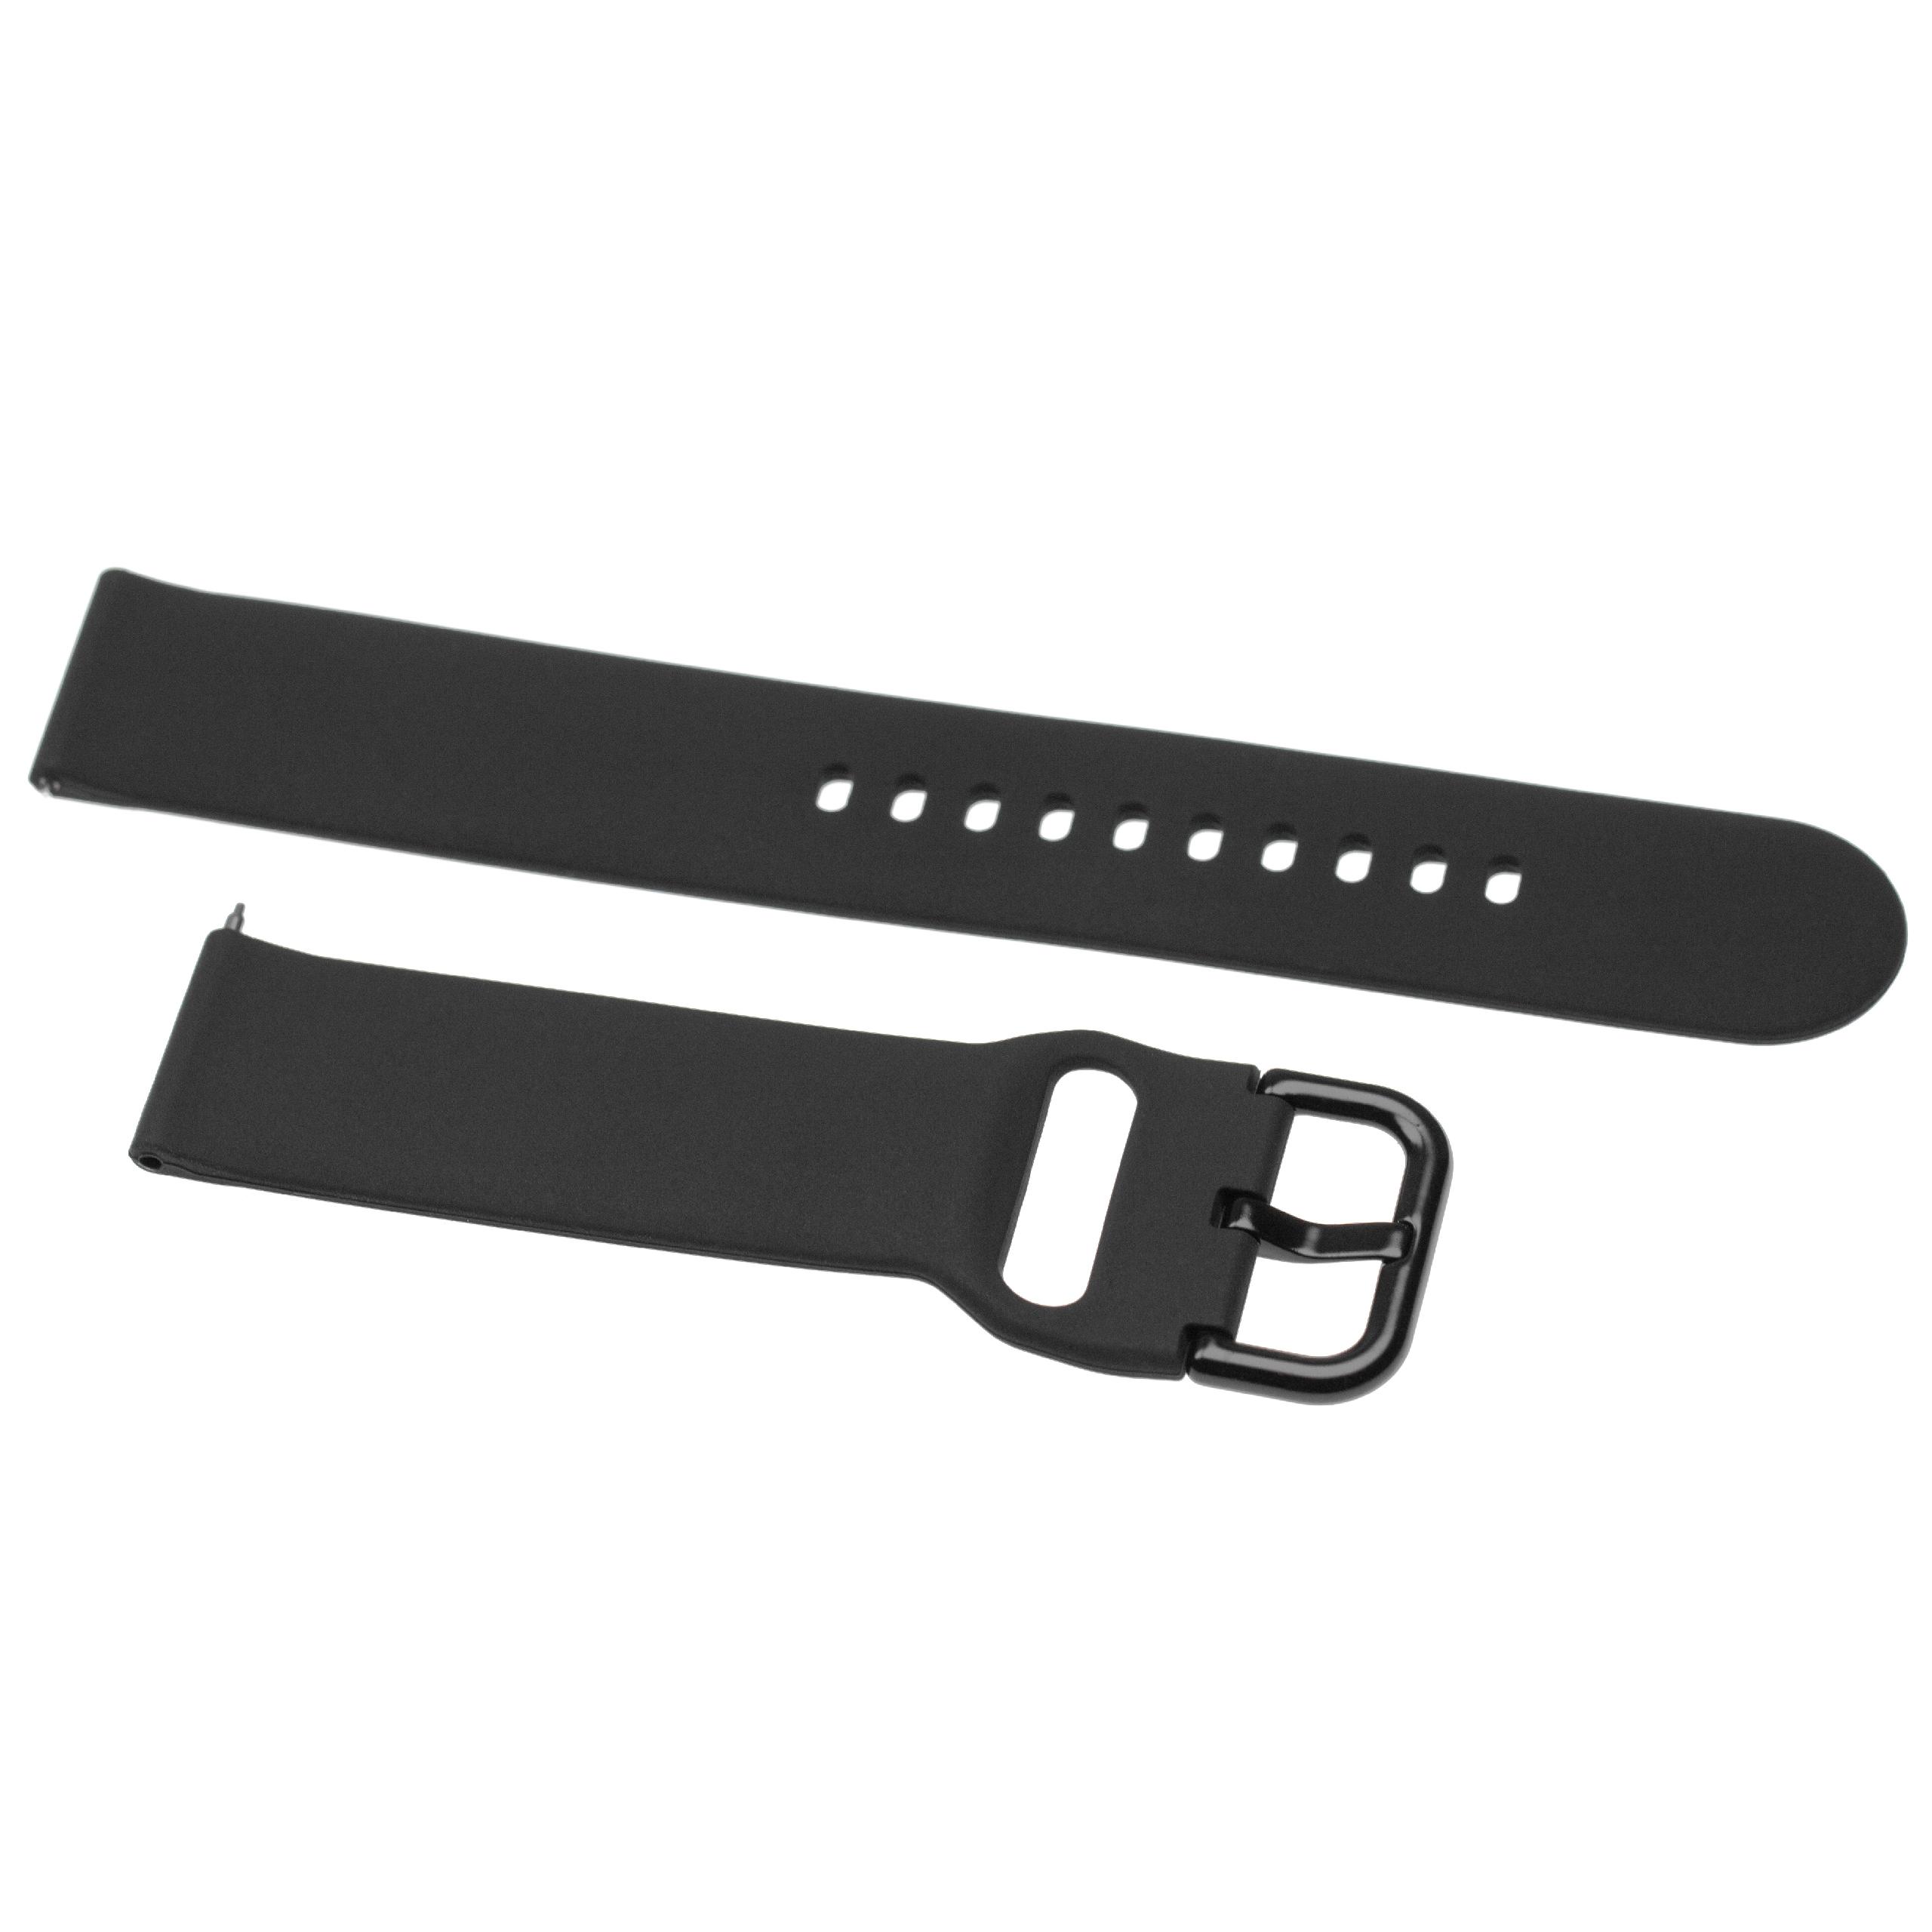 cinturino per Samsung Galaxy Watch Smartwatch - 13 + 8,8 cm lunghezza, 20mm ampiezza, silicone, nero